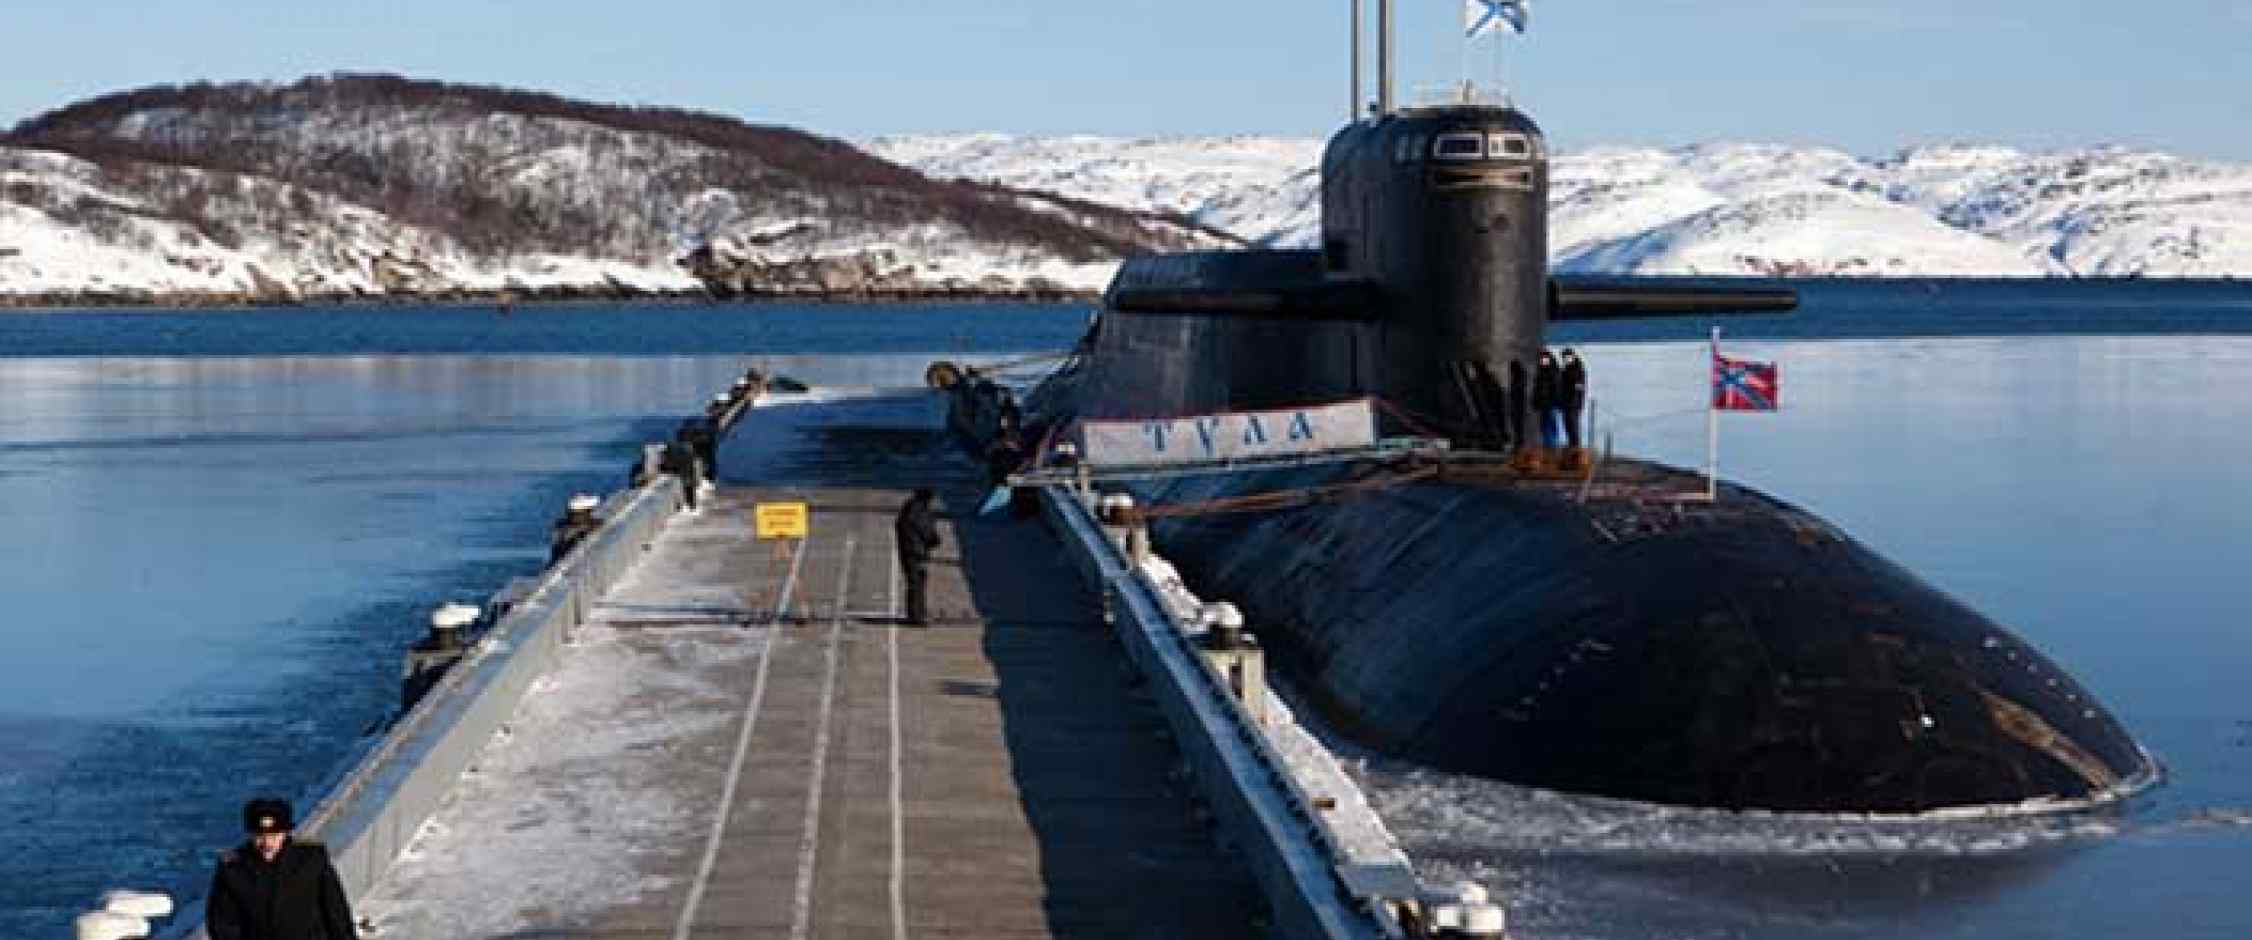 Russian Submarine Decommissioning